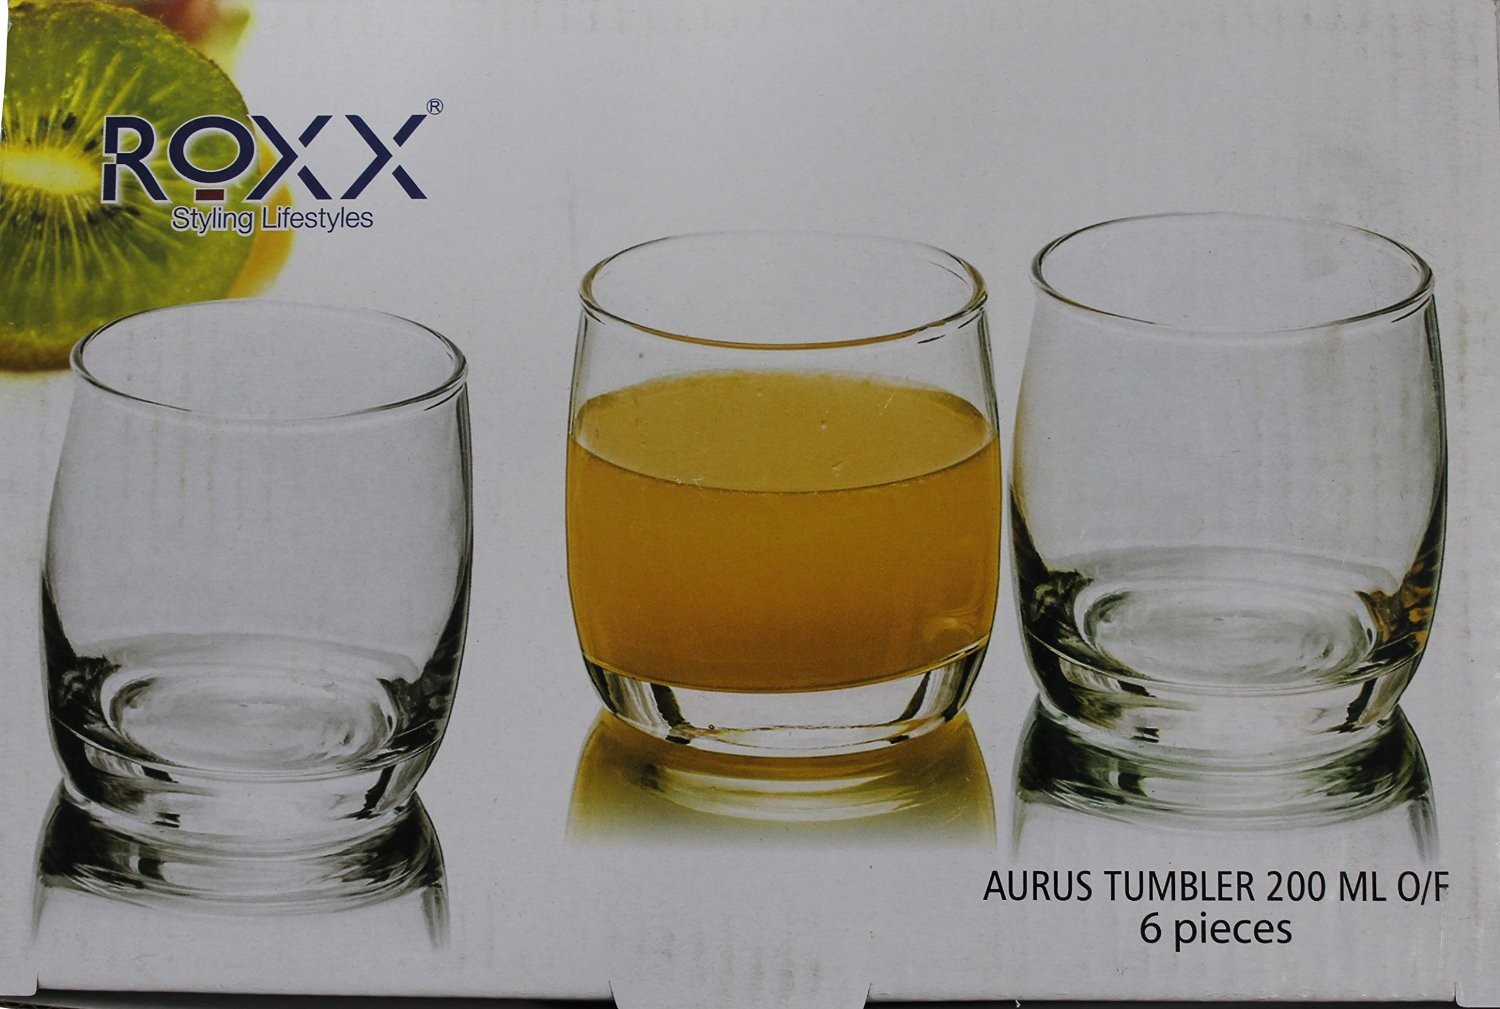  Roxx Aurus Tumbler 295 ml 6 pcs. Glass Set 